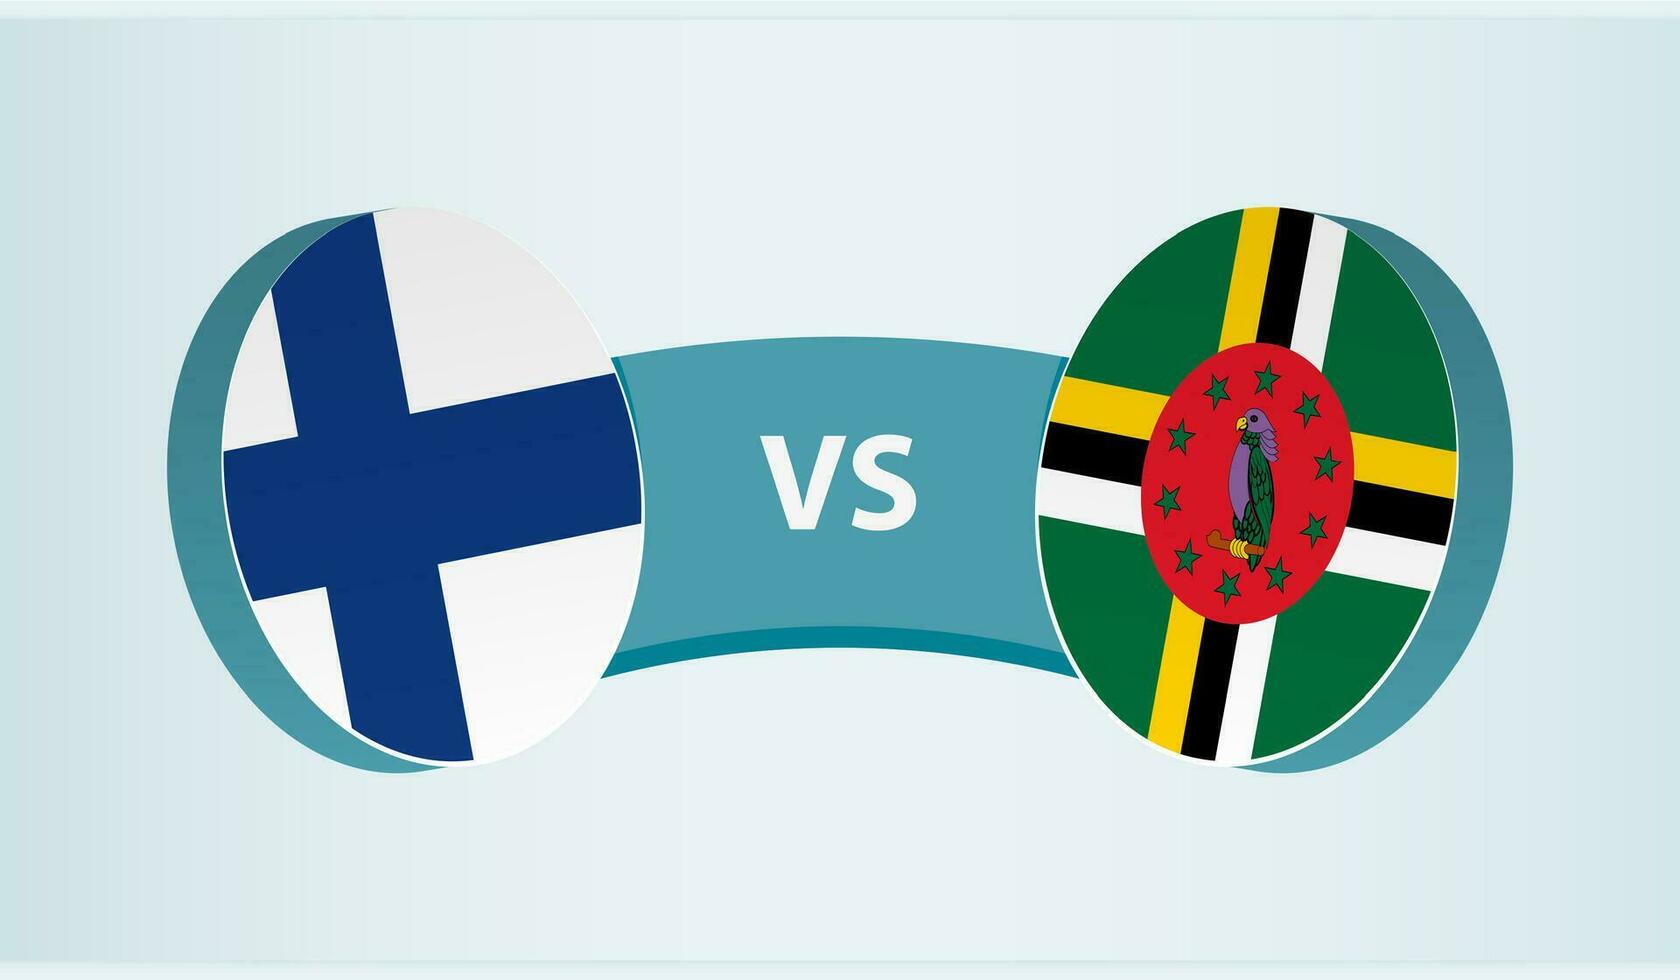 finland mot dominica, team sporter konkurrens begrepp. vektor